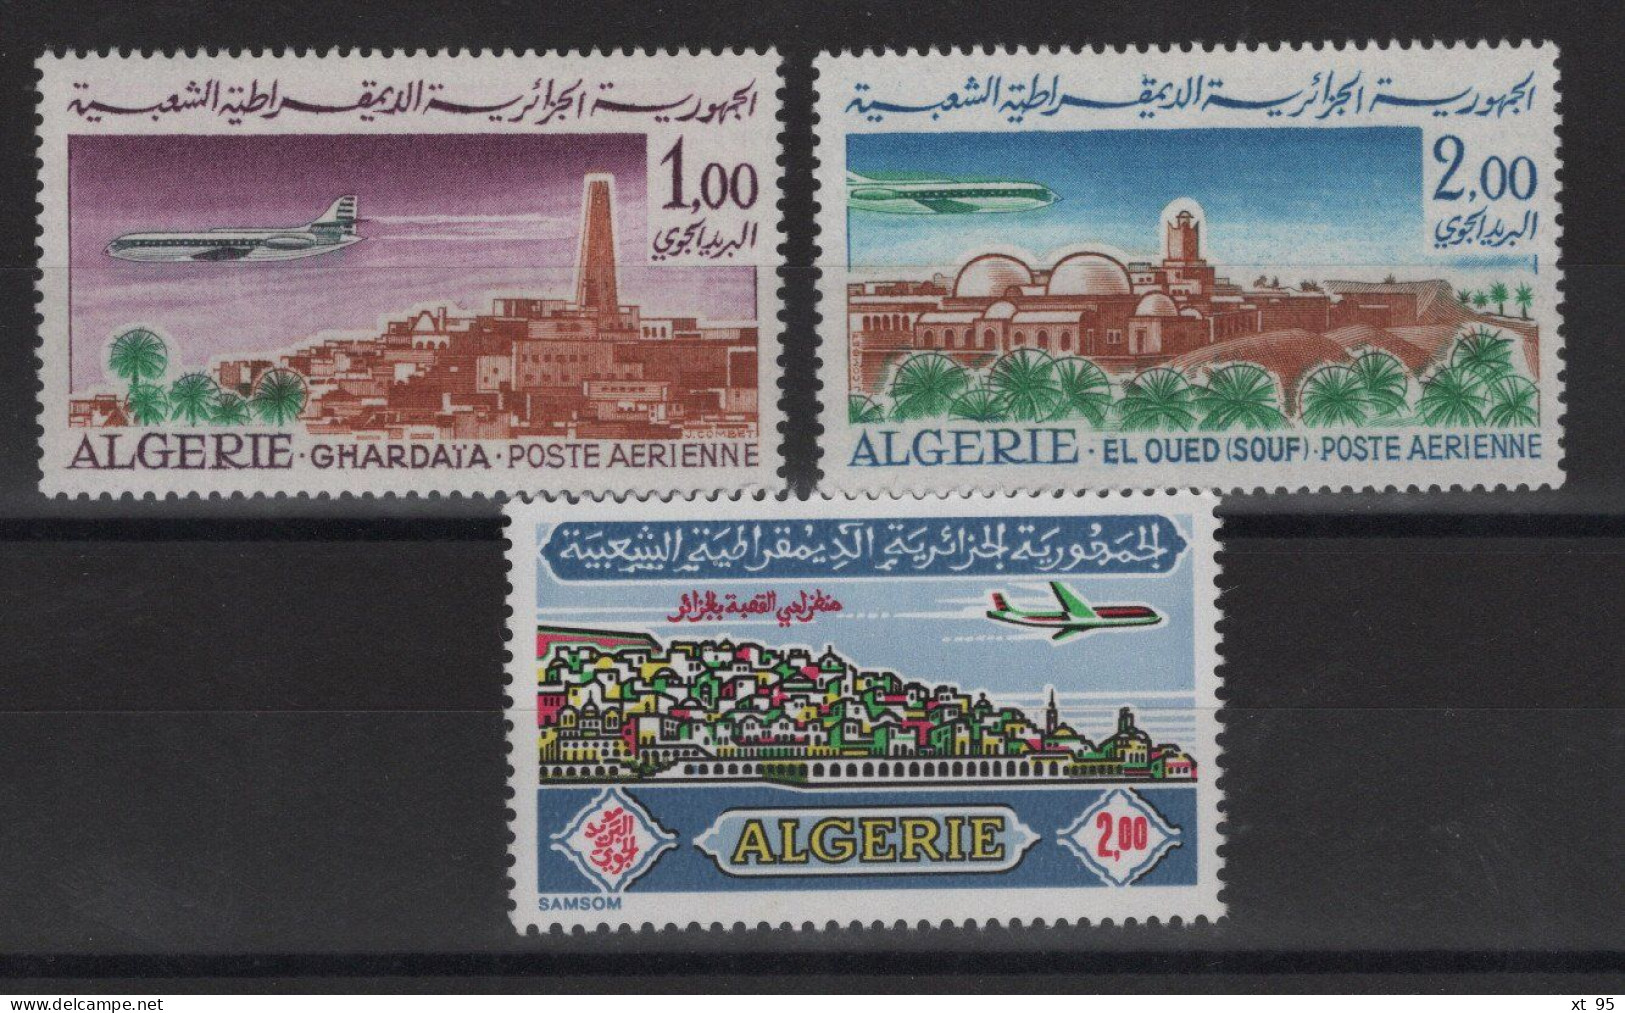 Algerie - PA N°15 + 16 + 18 - Cote 8.55€ - ** Neuf Sans Charniere - Algerije (1962-...)